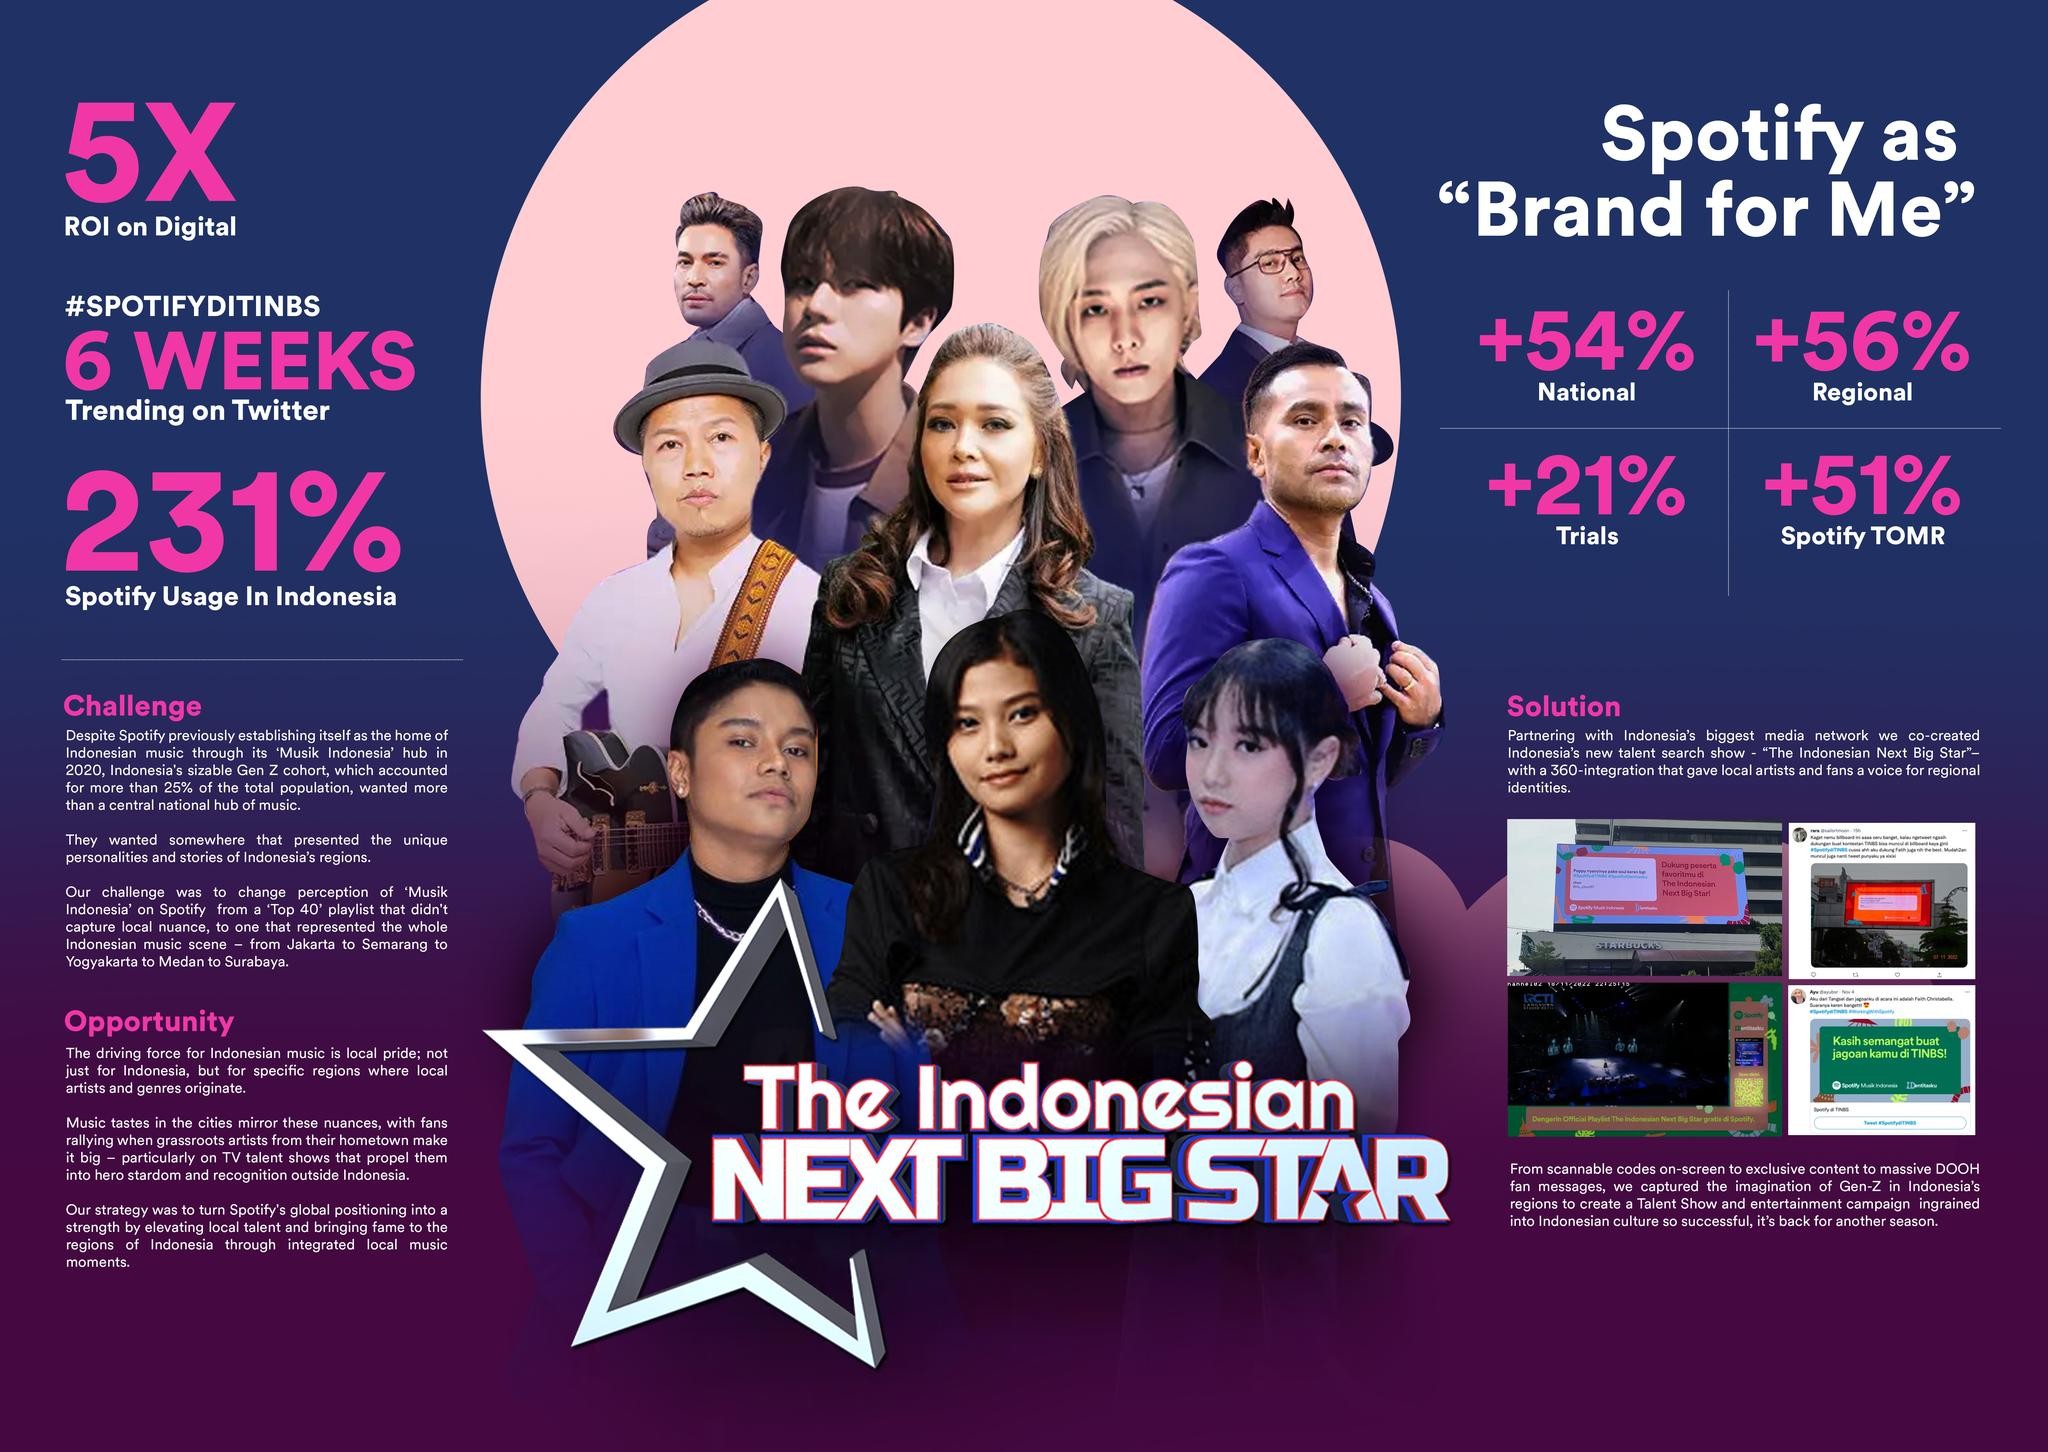 "The Indonesian Next Big Star"